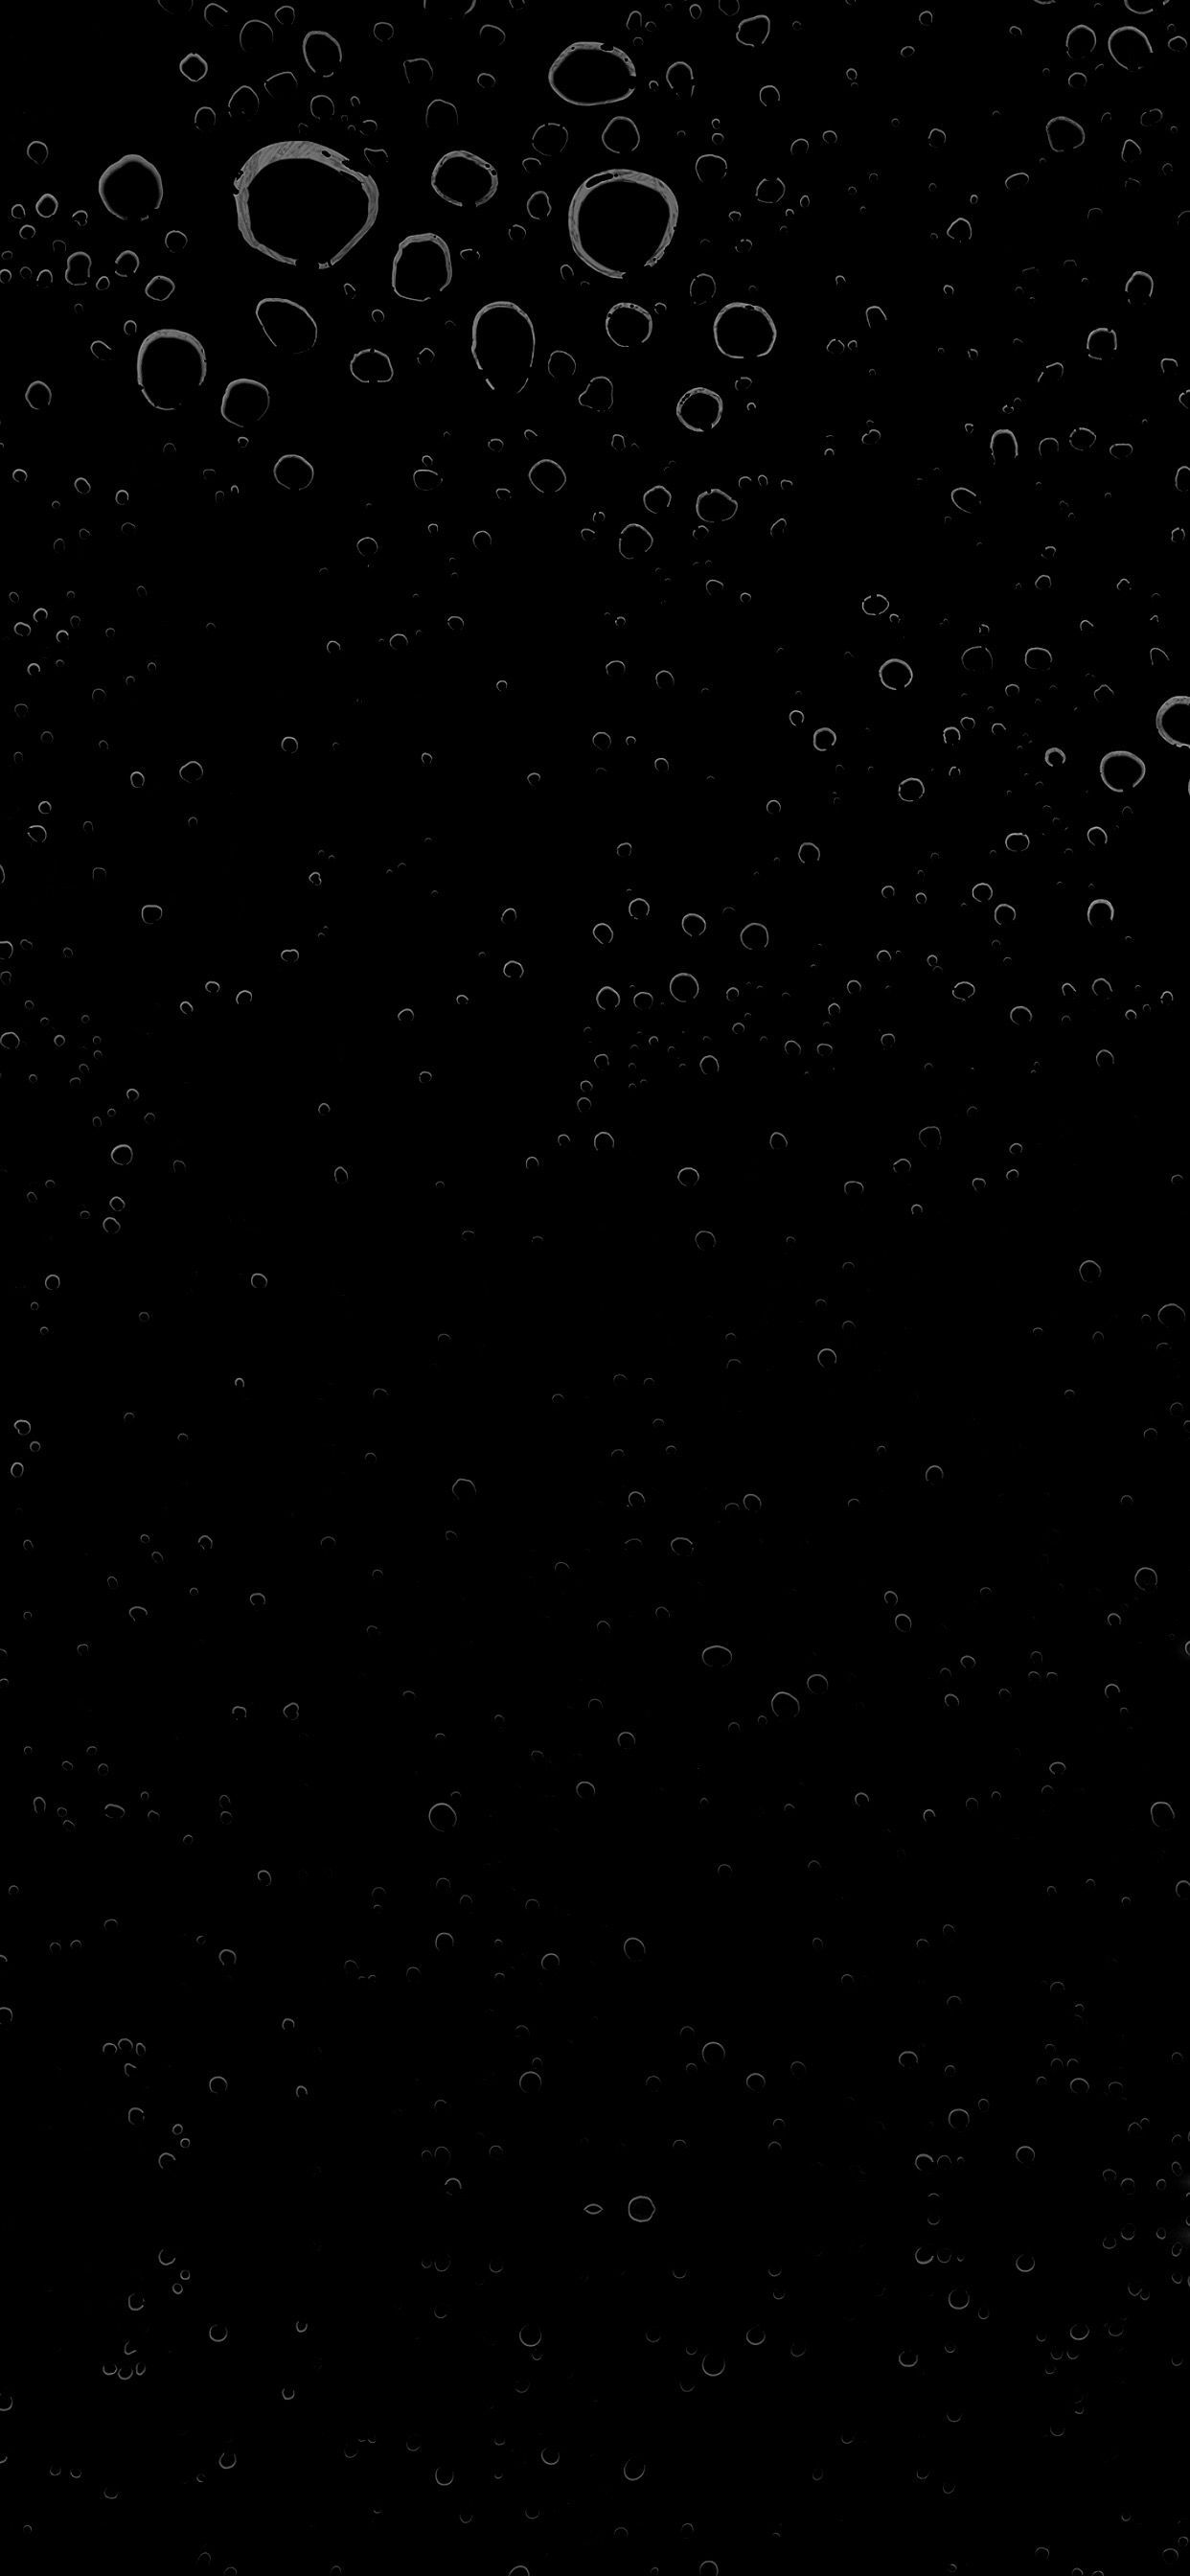 iOS Black Wallpaper Free iOS Black Background